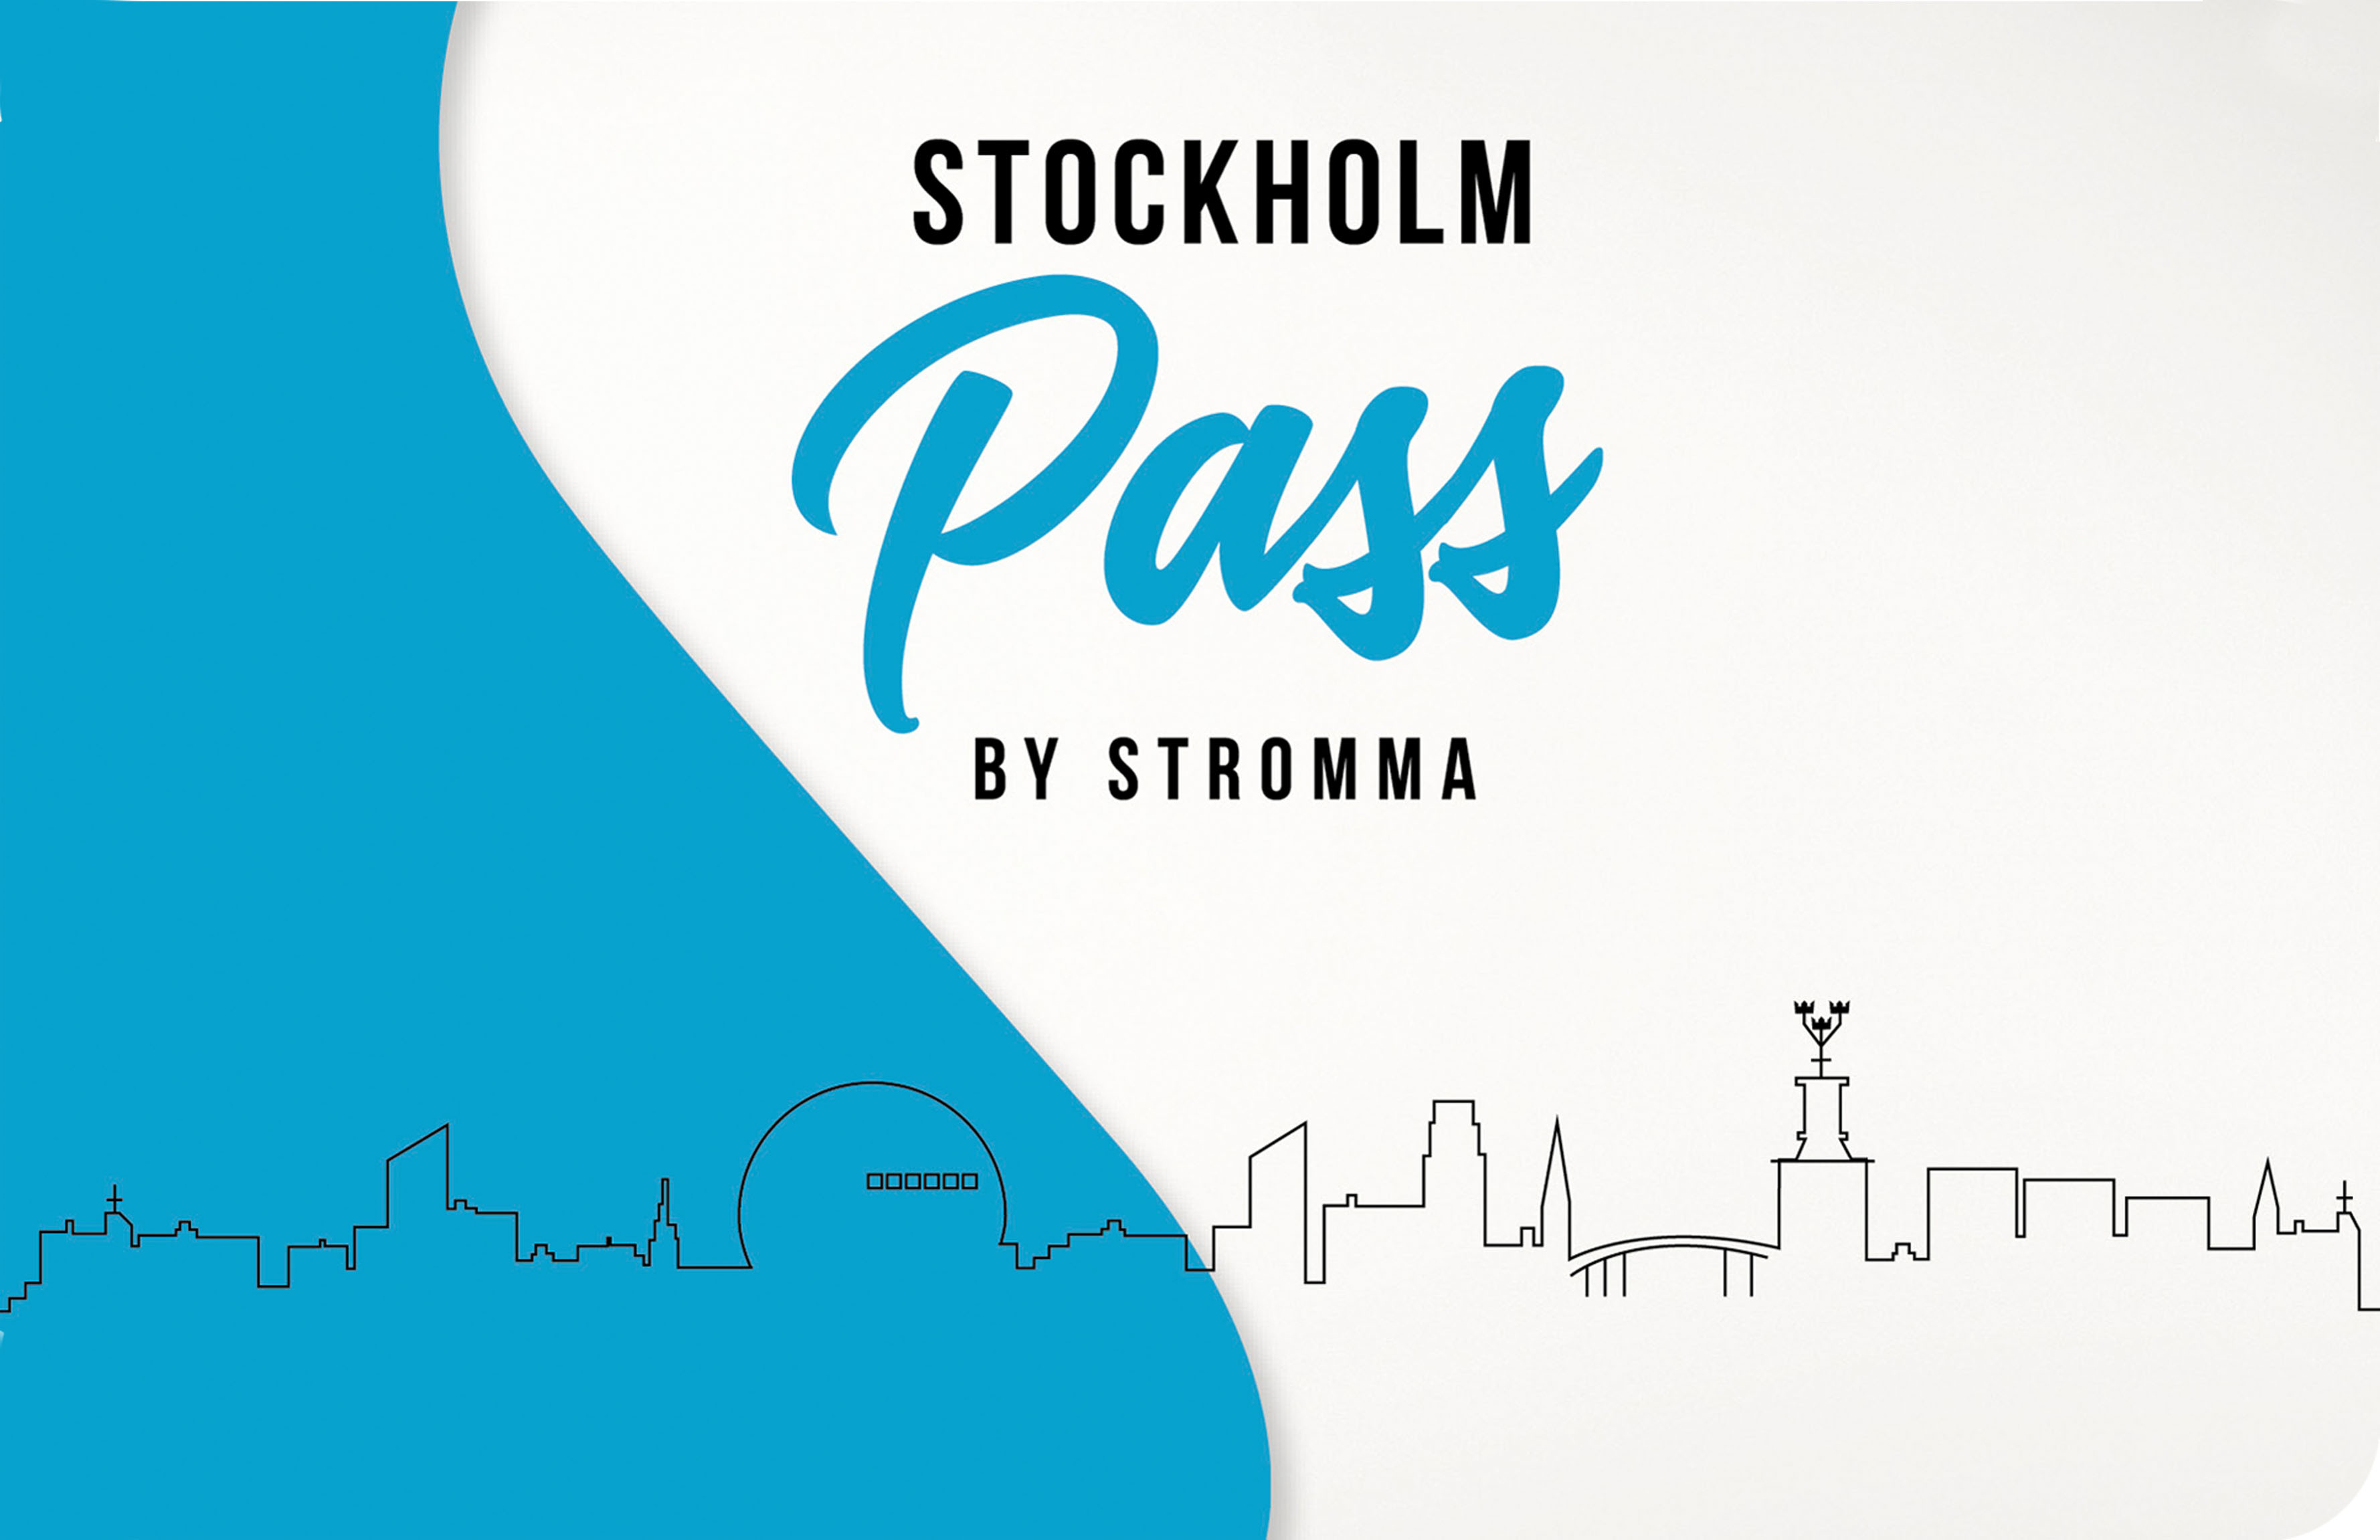 Tarjeta turística de Estocolmo